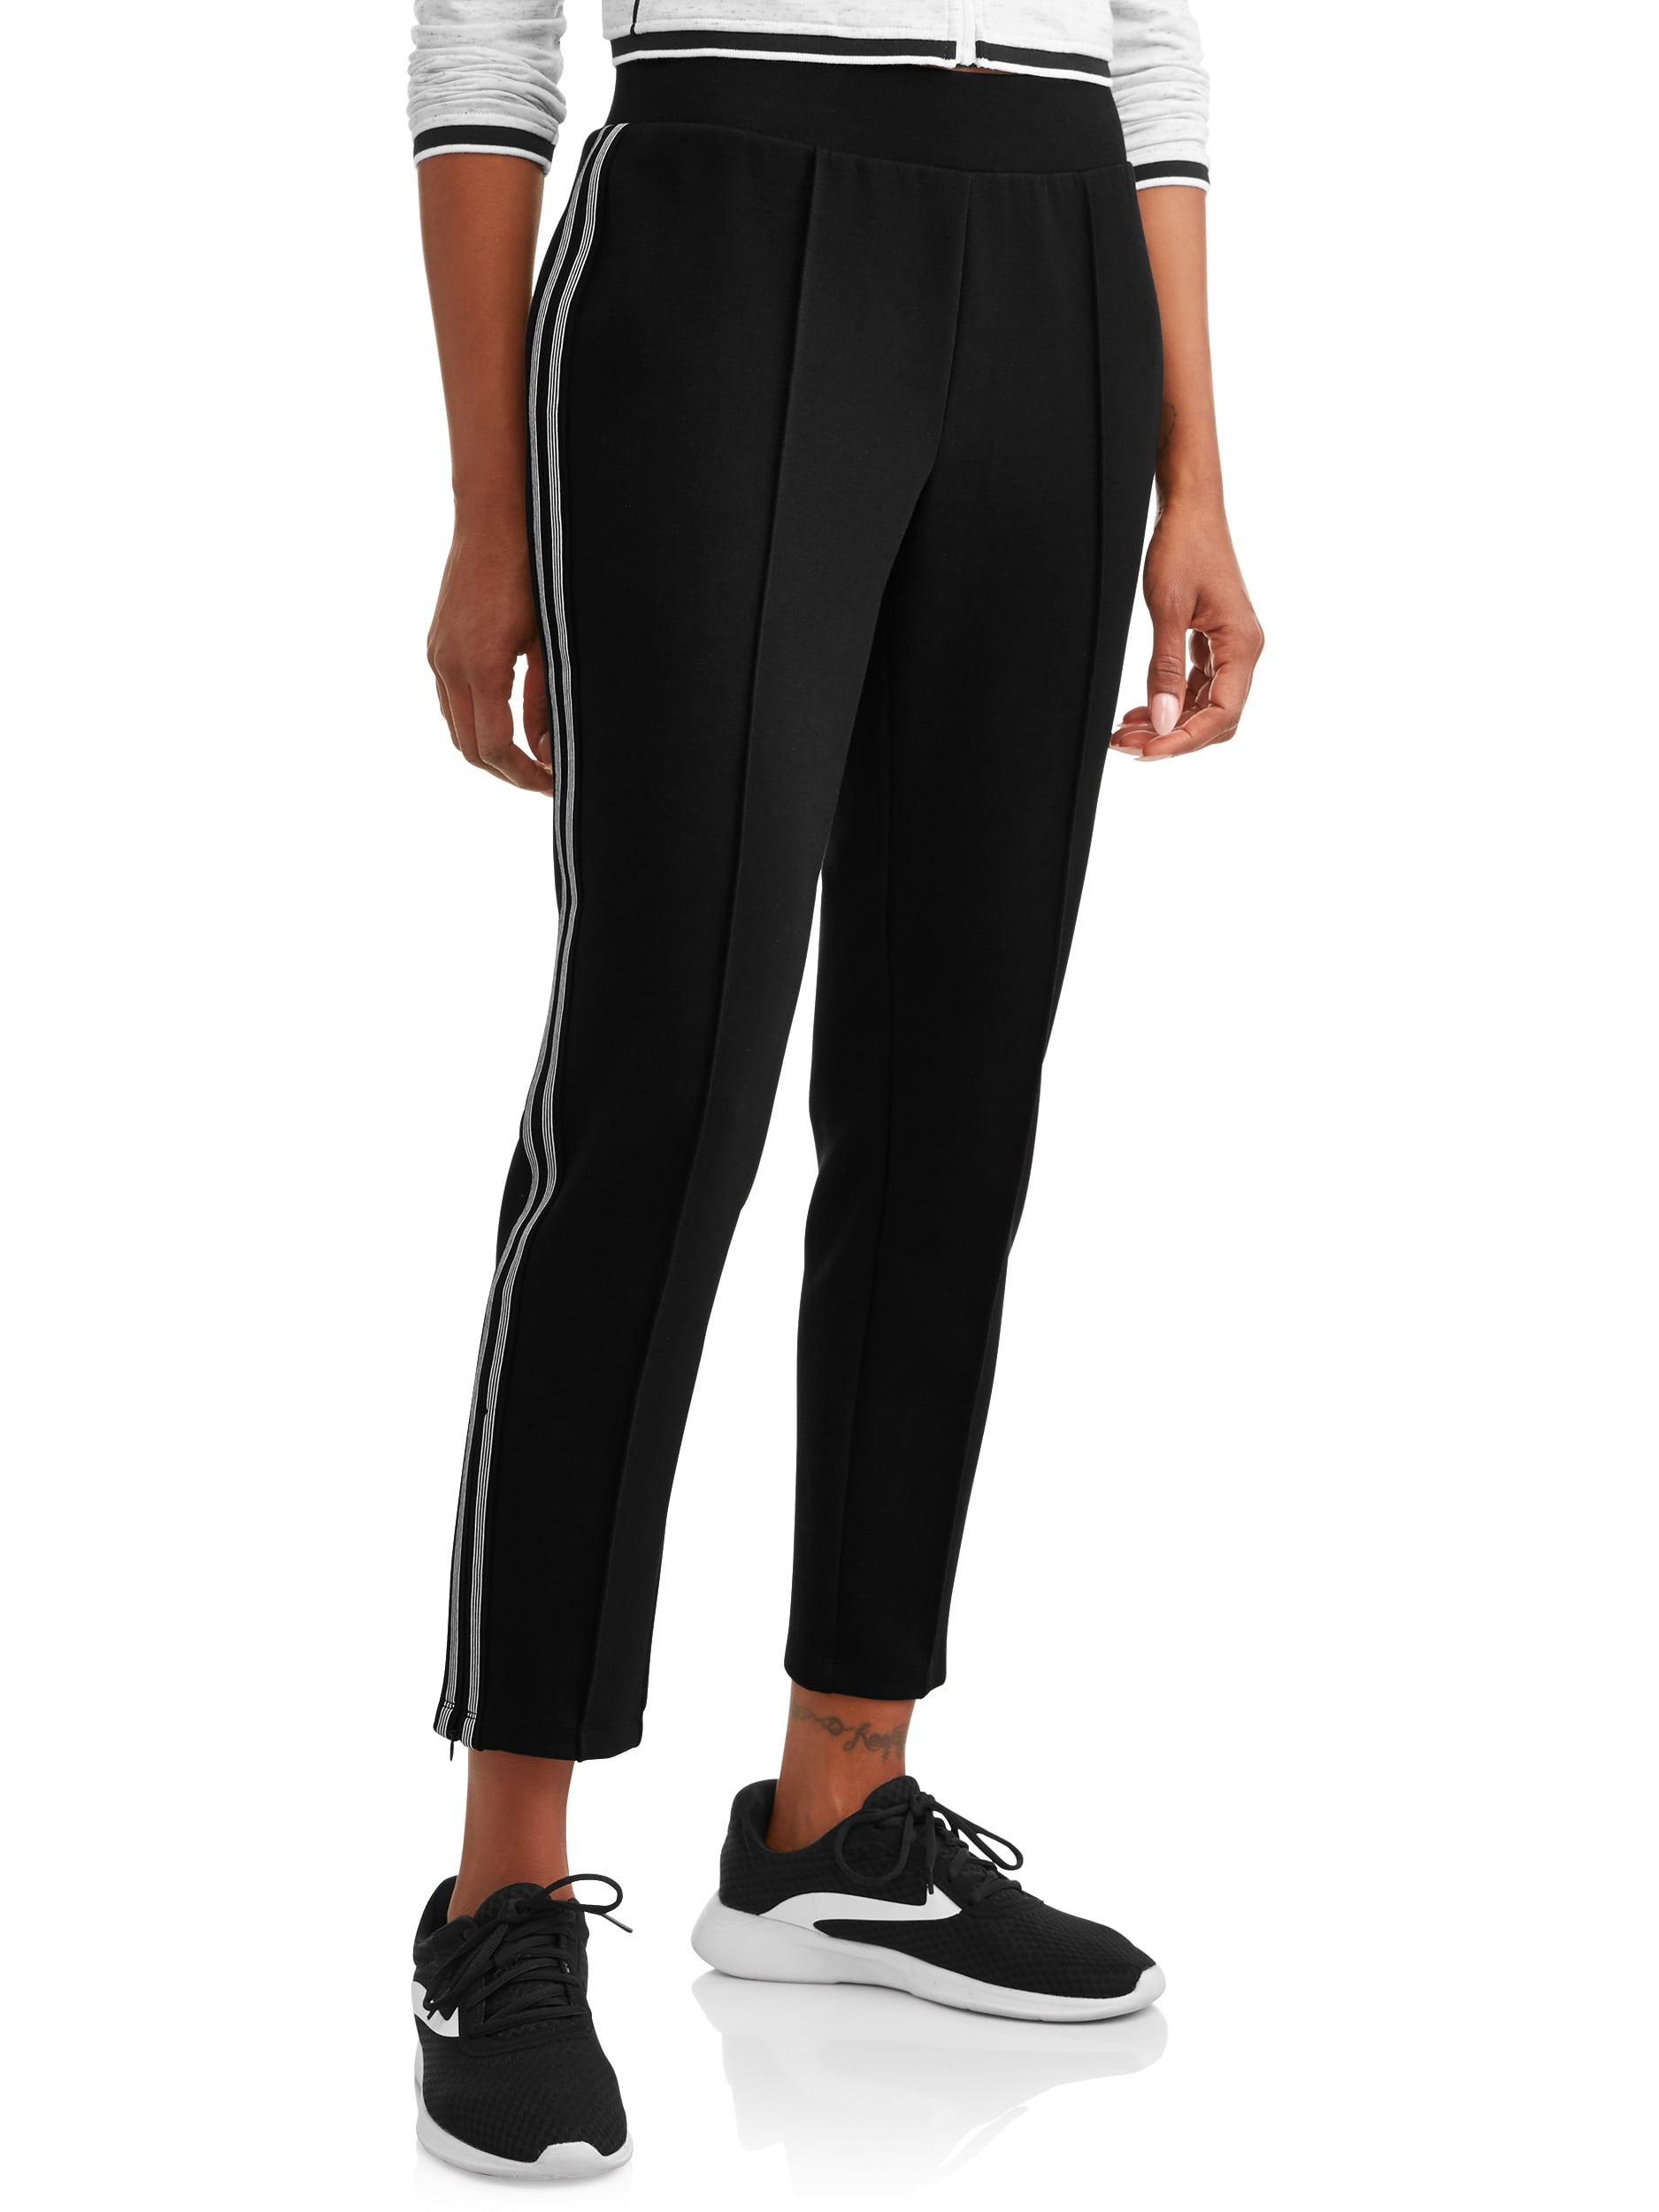 Avia Women Sweatpants Extra Large Black Running Sport Stretch